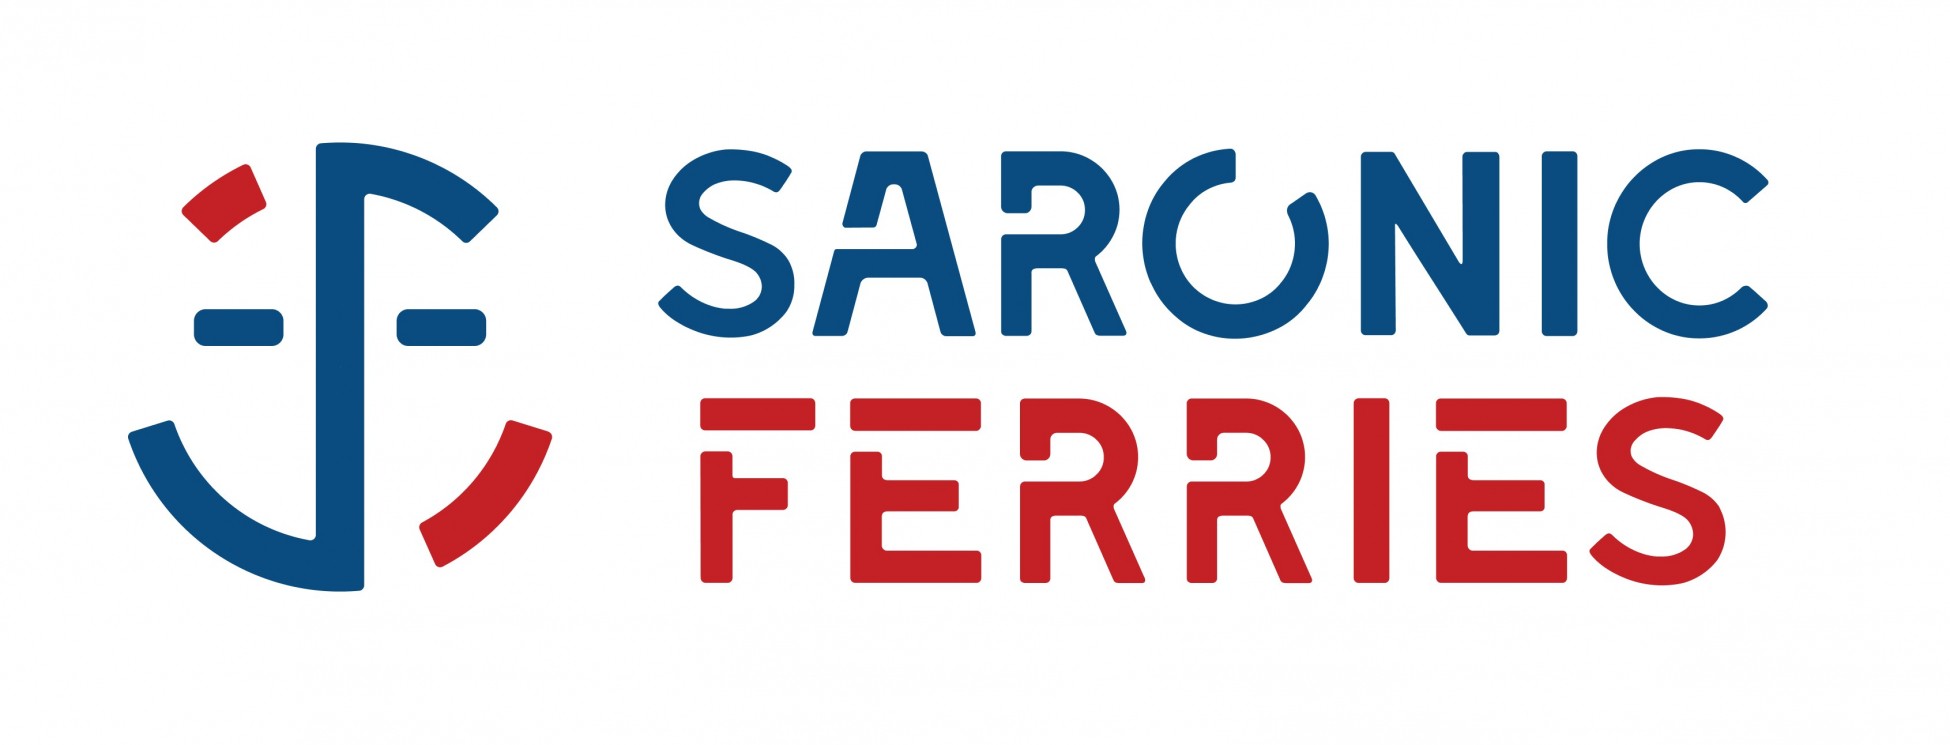 Saronic Ferries: Στηρίζει την προσπάθεια του Ερυθρού Σταυρού για την  ανακούφιση των πυρόπληκτων | Ειδήσεις για την Οικονομία | newmoney